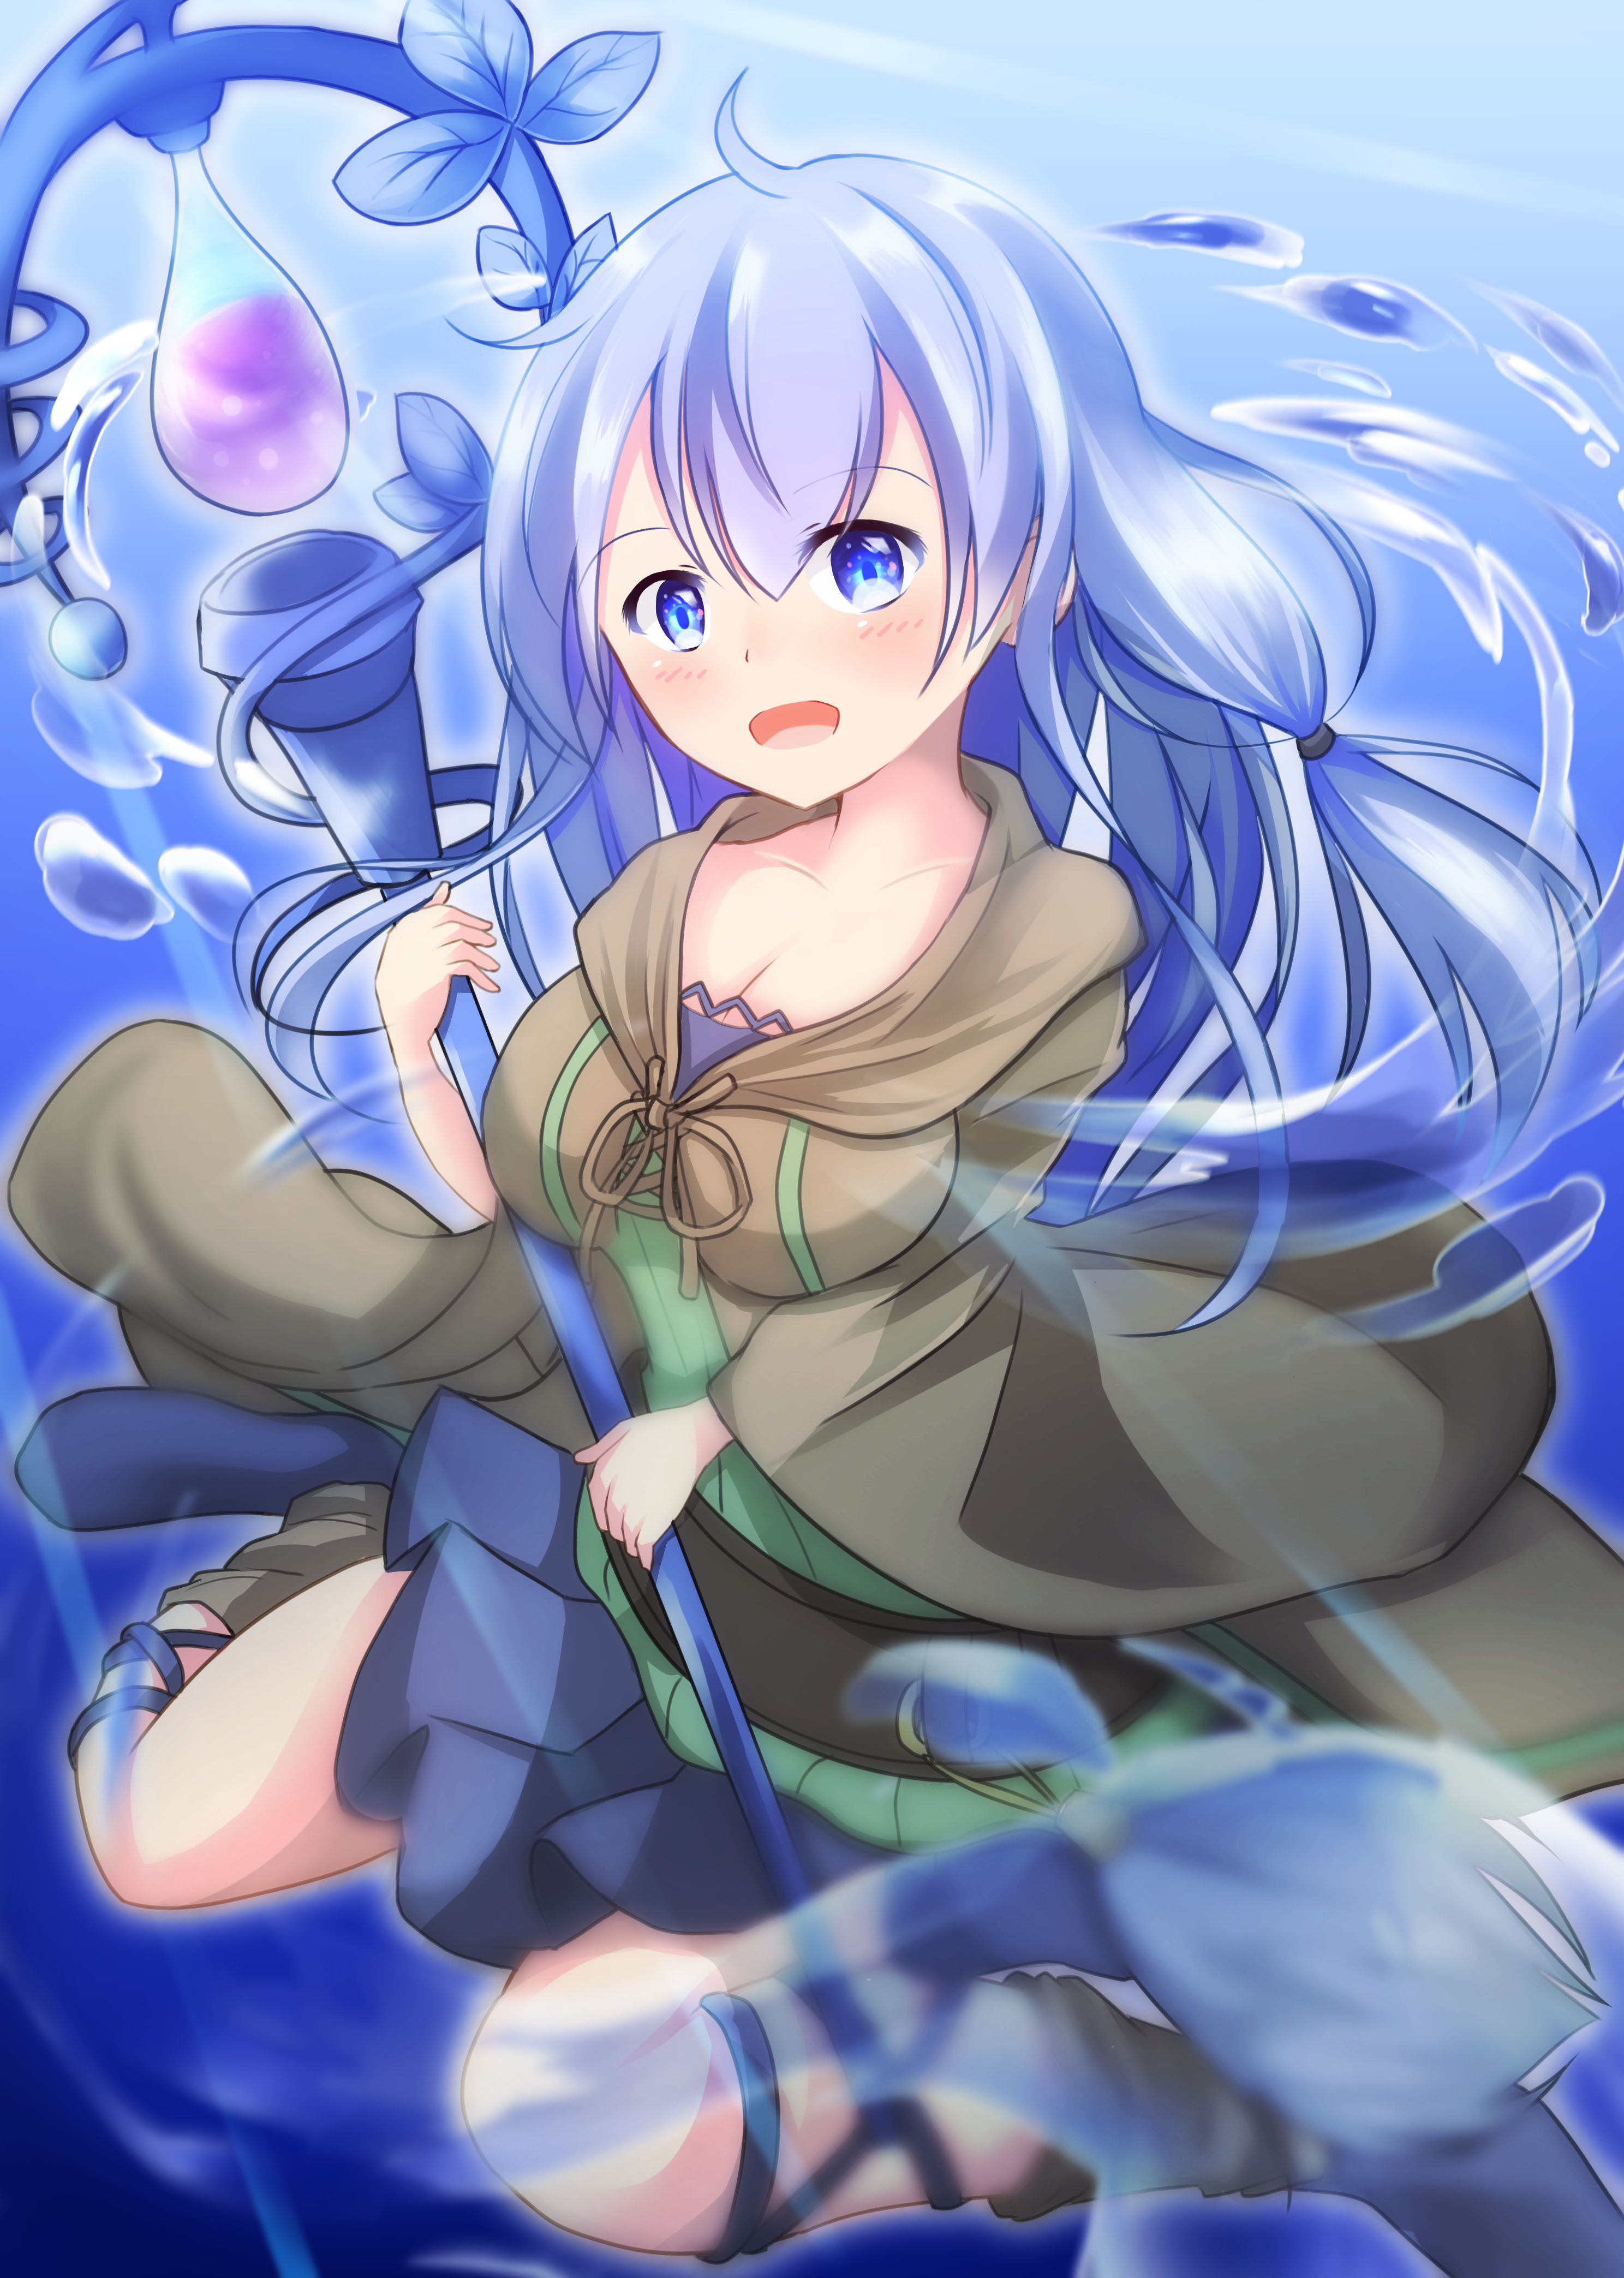 Anime 2976x4175 anime anime girls Trading Card Games Yu-Gi-Oh! Eria the Water Charmer long hair blue hair solo artwork digital art fan art